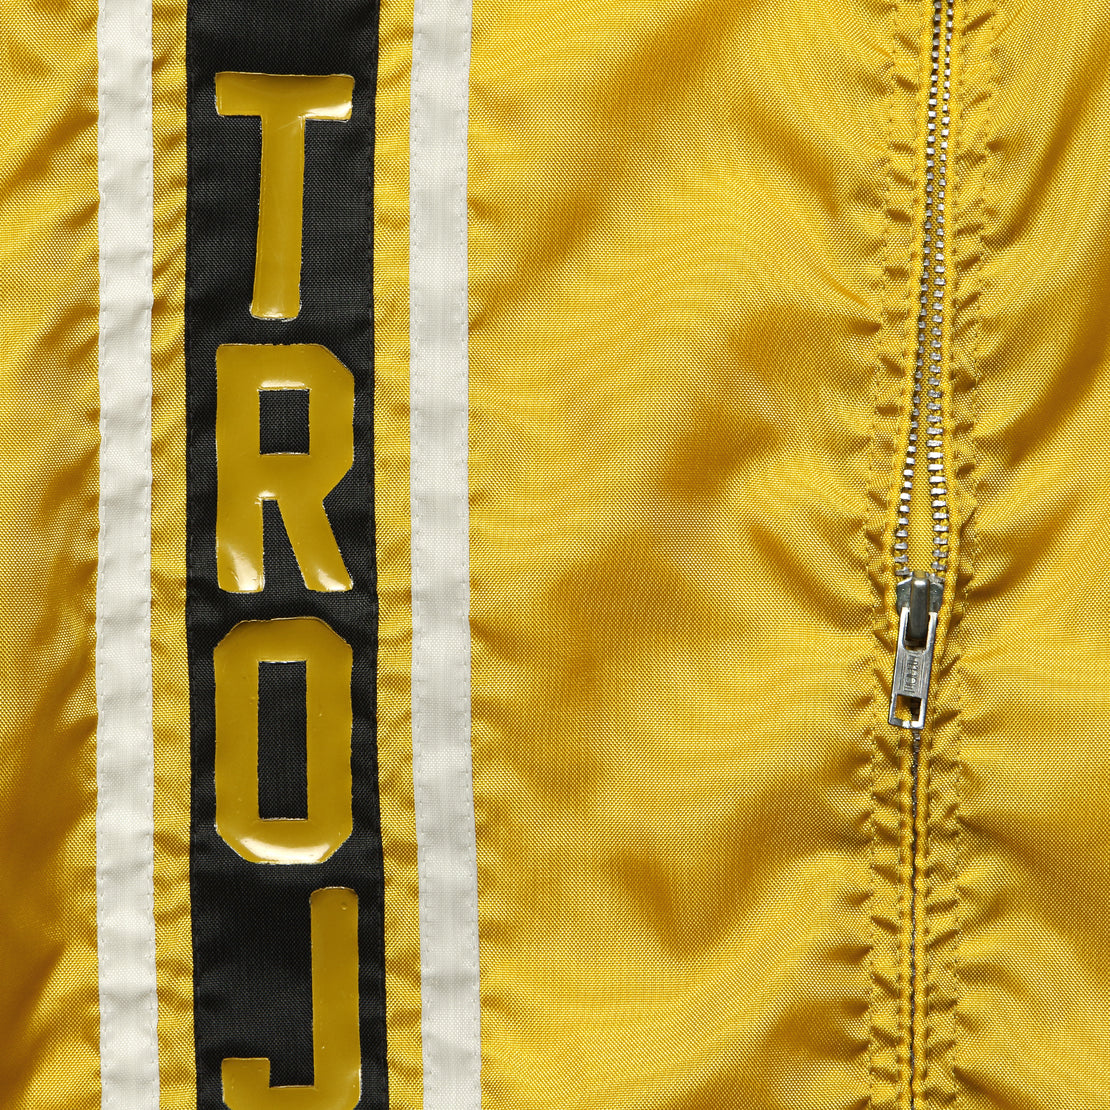 Swingster Trojans Nylon Racing Jacket - Yellow/Black/White